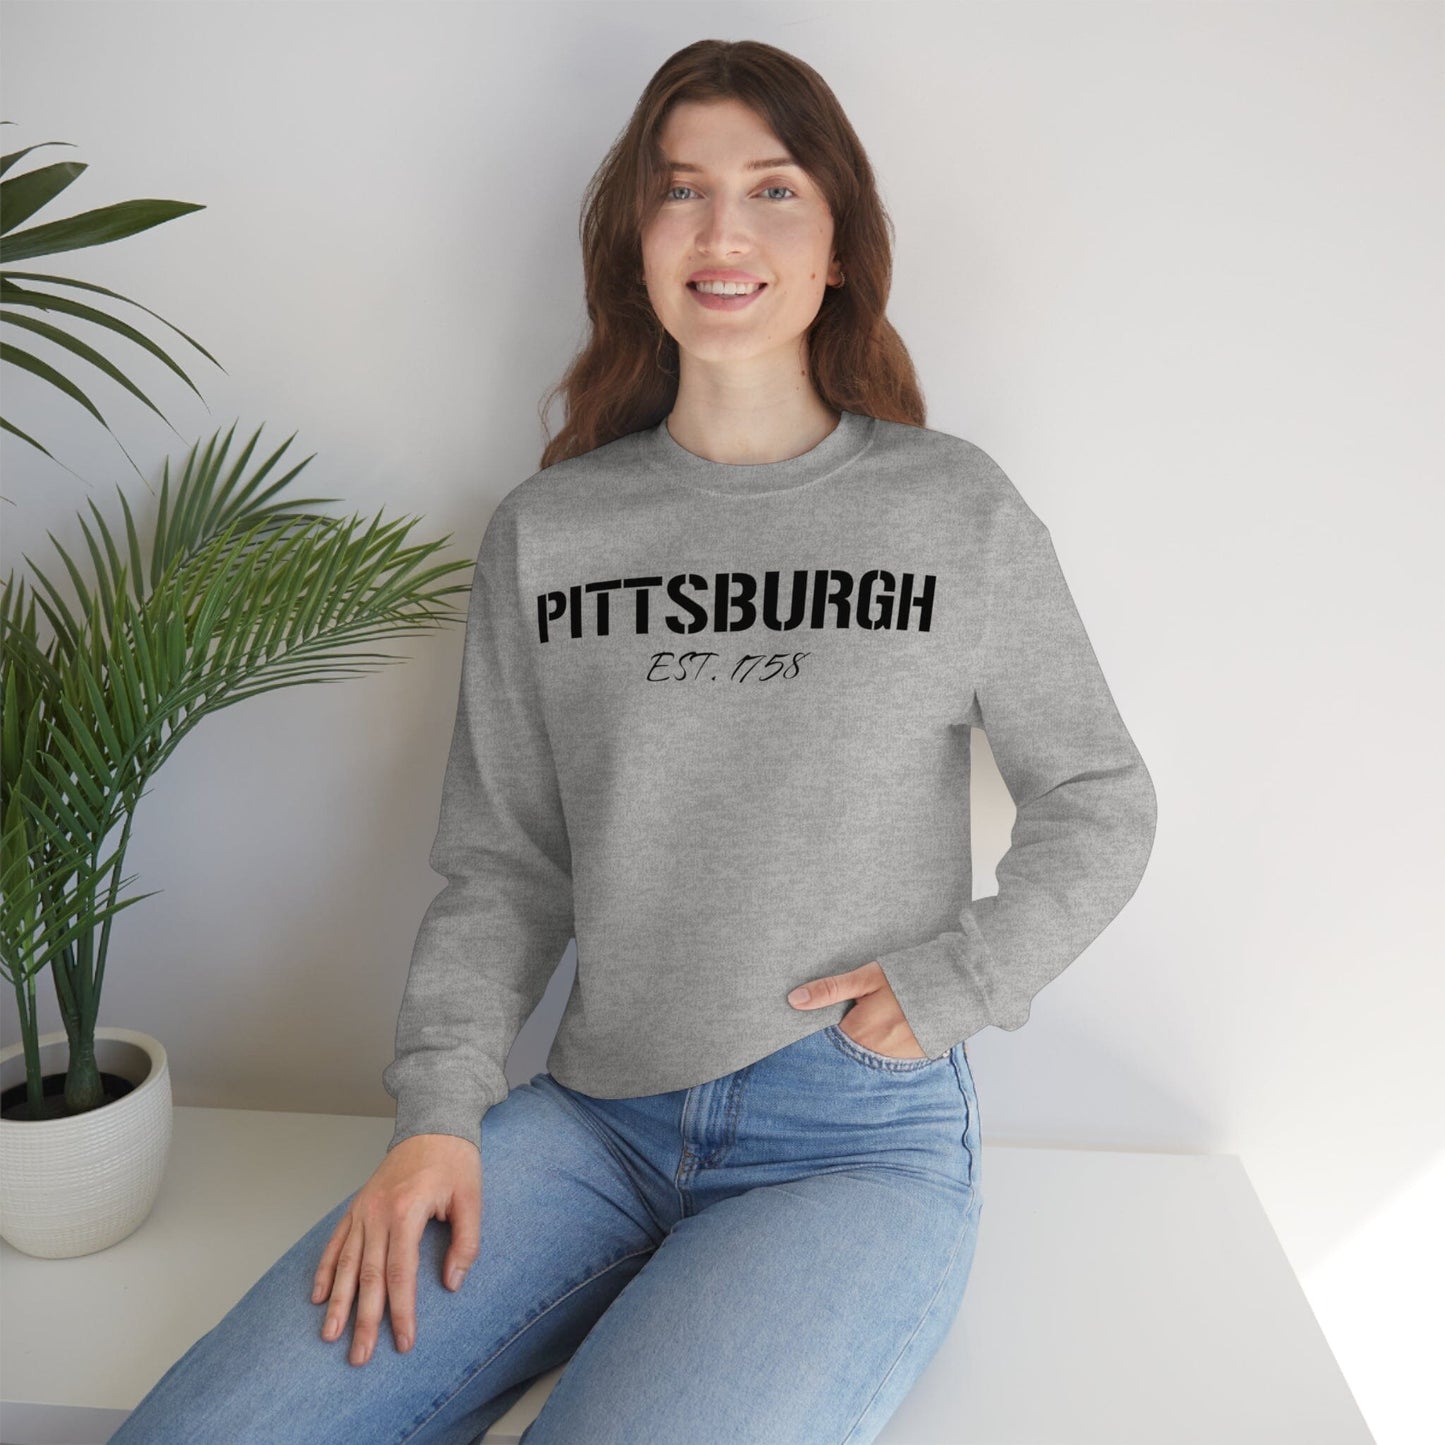 Pittsburgh EST 1758 Sweatshirt Sweatshirt Printify S Sport Grey 